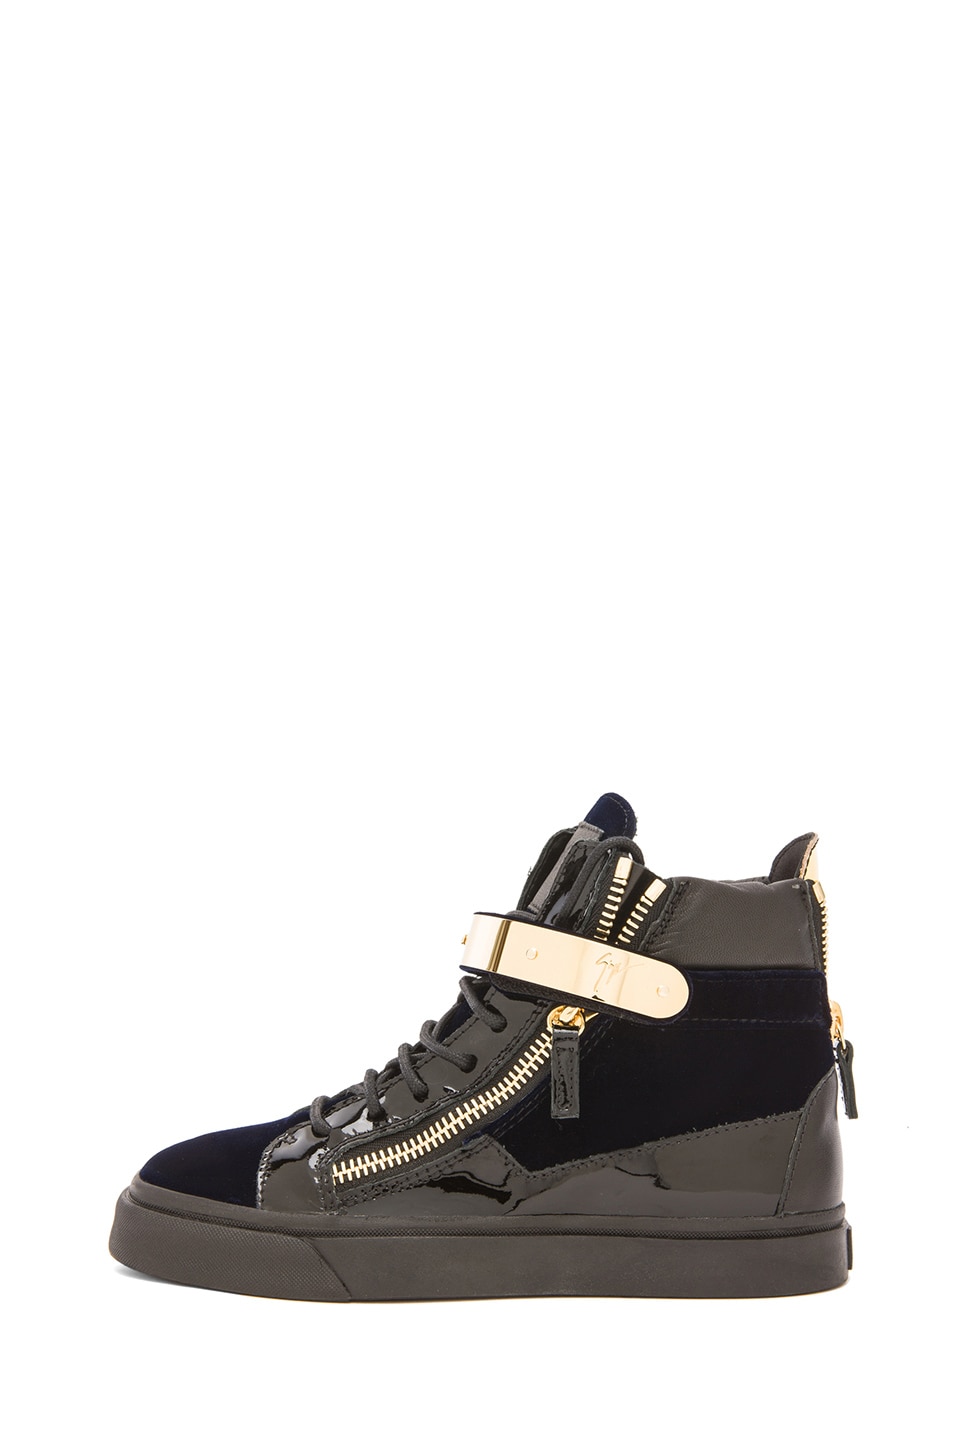 Image 1 of Giuseppe Zanotti Velvet & Patent Leather Gold Strap Sneaker in Navy and Black Multi